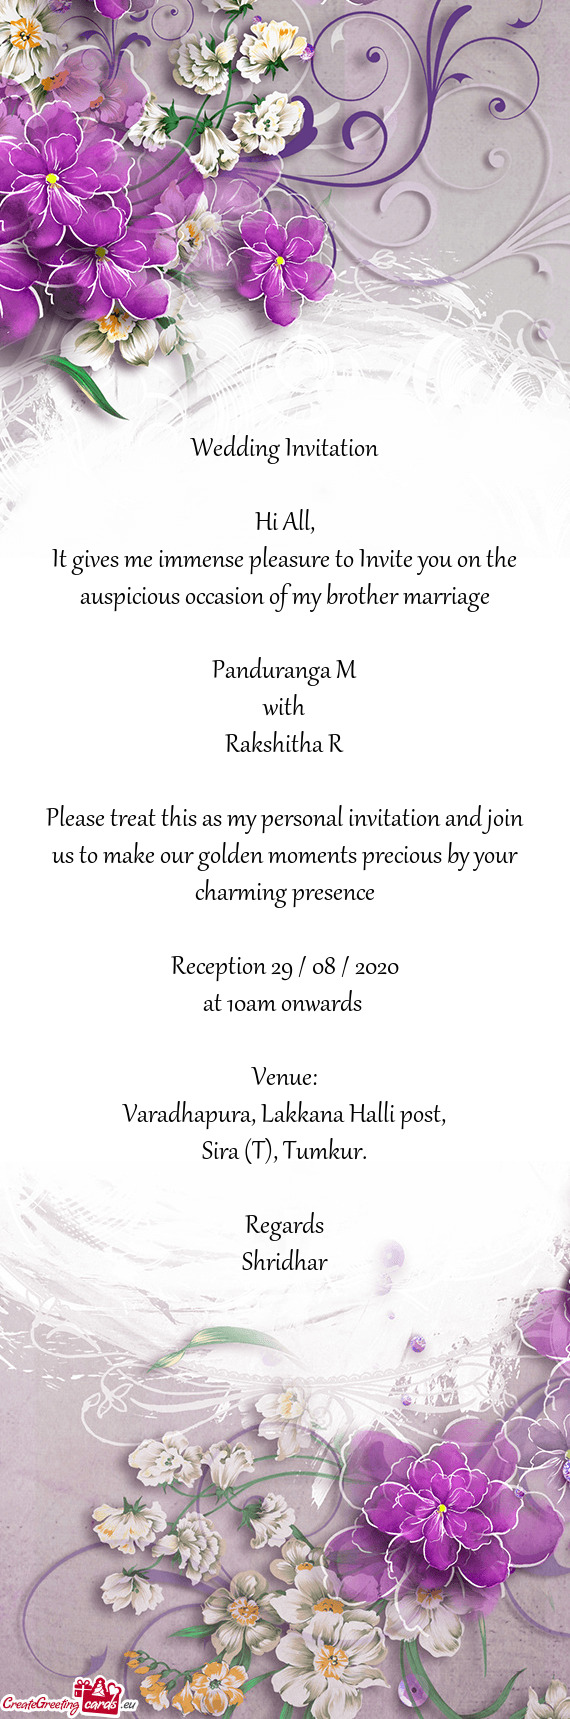 Varadhapura, Lakkana Halli post